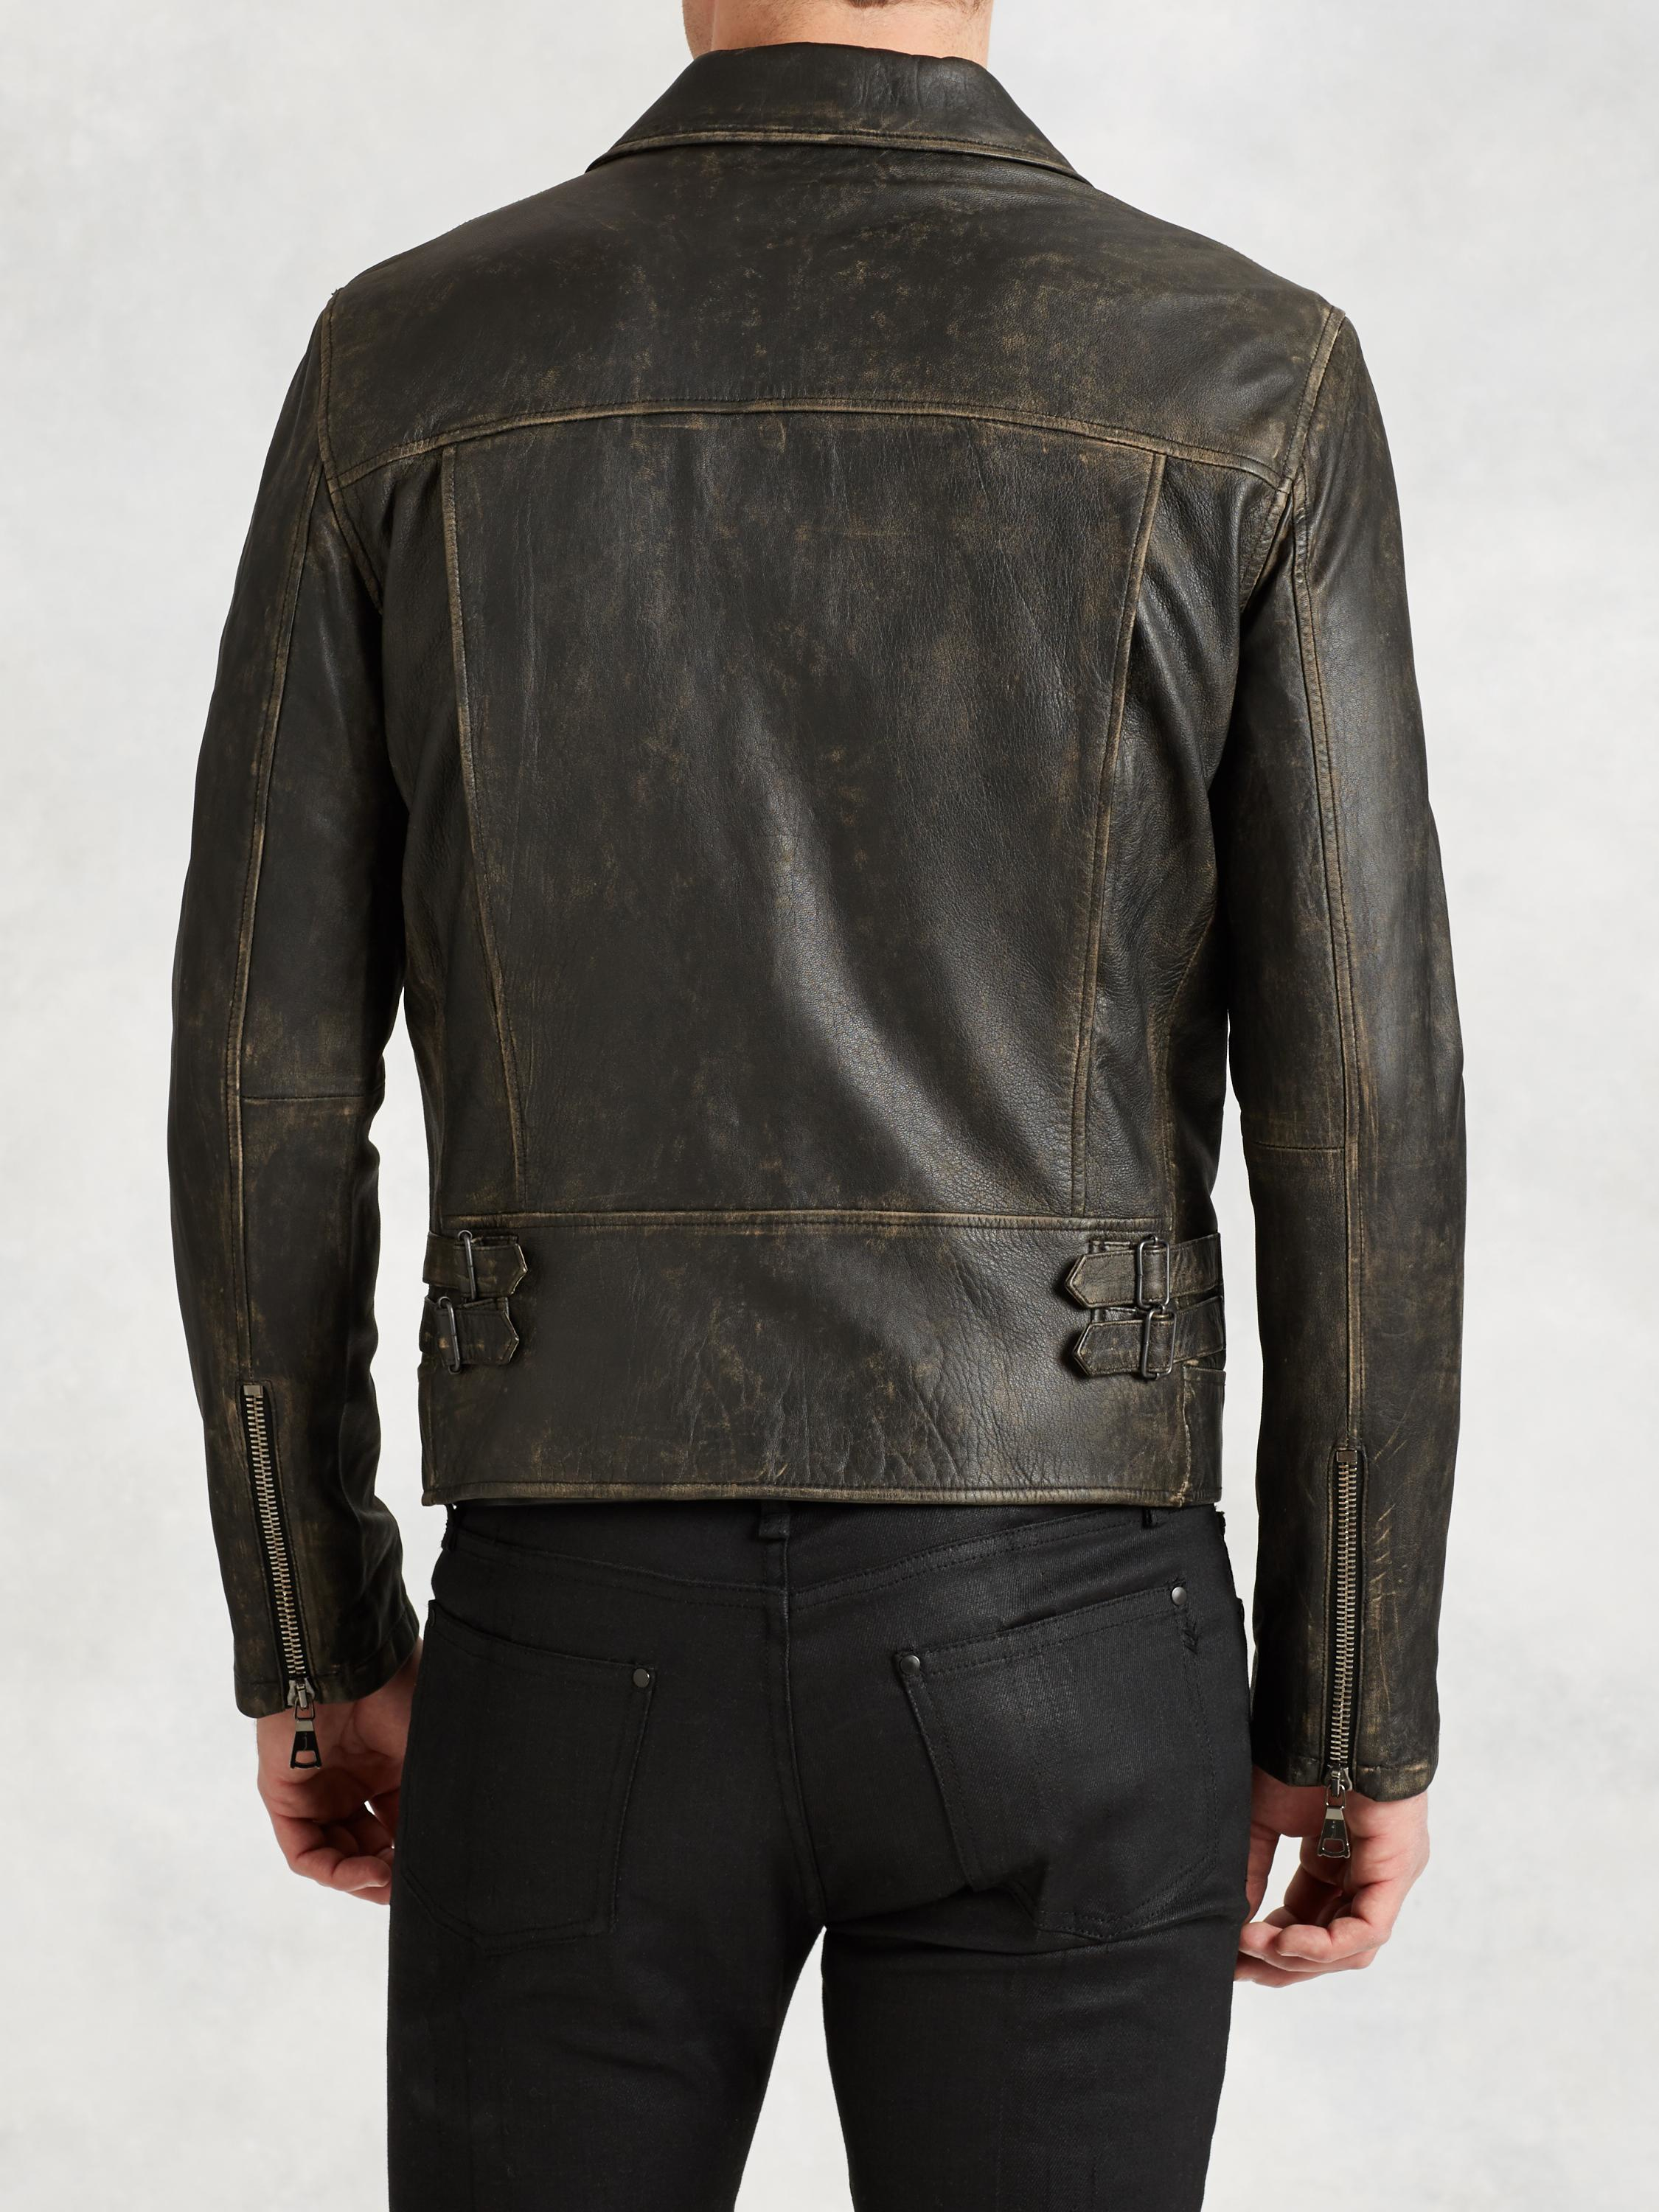 John Varvatos Asymmetrical Leather Biker Jacket in Black for Men - Lyst